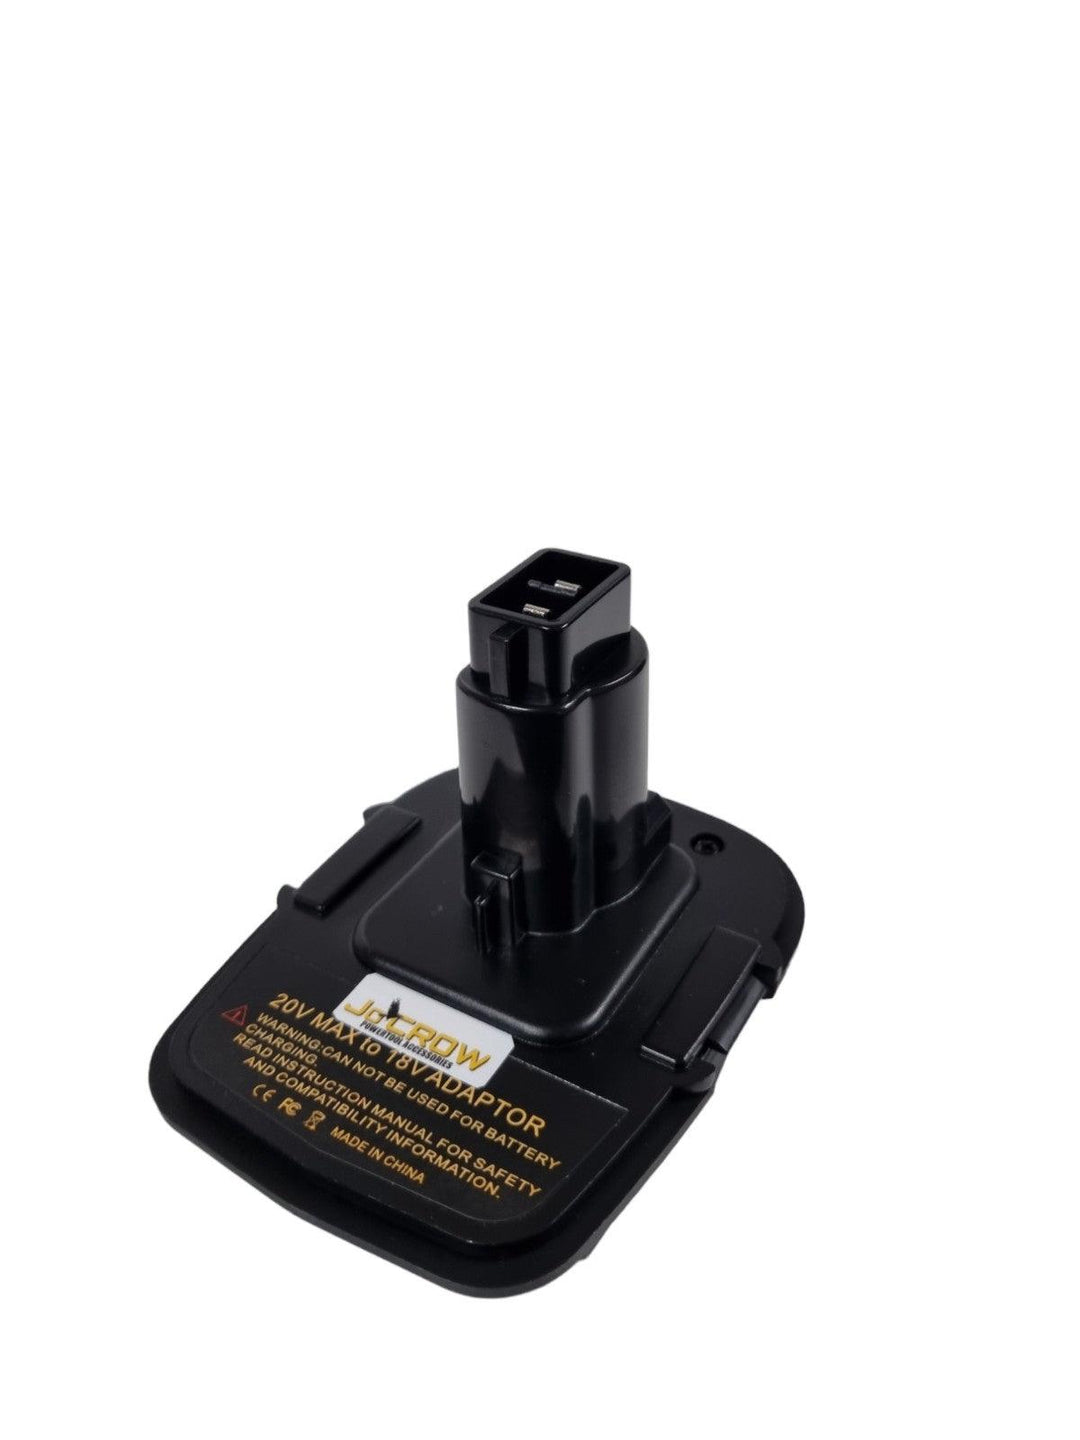 Adapter for MILWAUKEE 18v Li-ion battery to DeWalt 18v Ni-cd/Ni-mh Tools. With USB - JoCROW PTY LTD